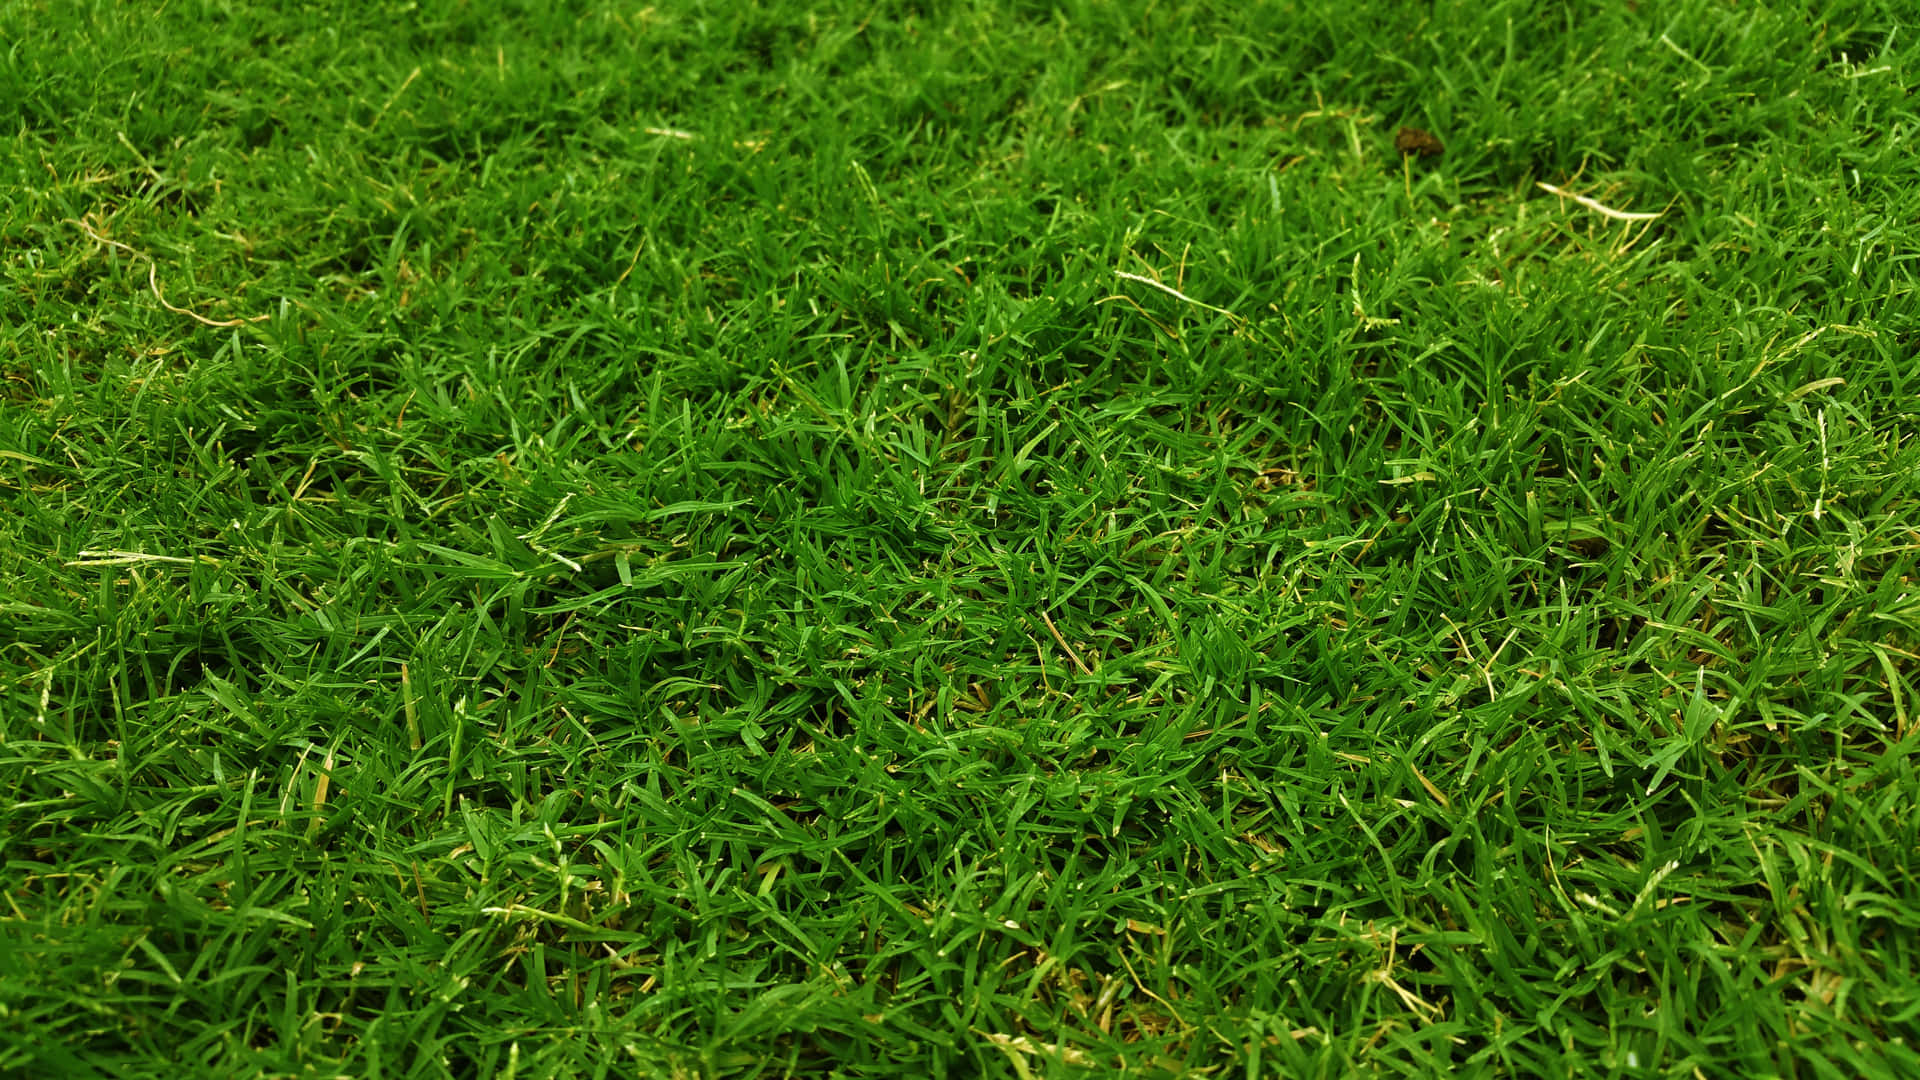 A lush, vibrant green lawn